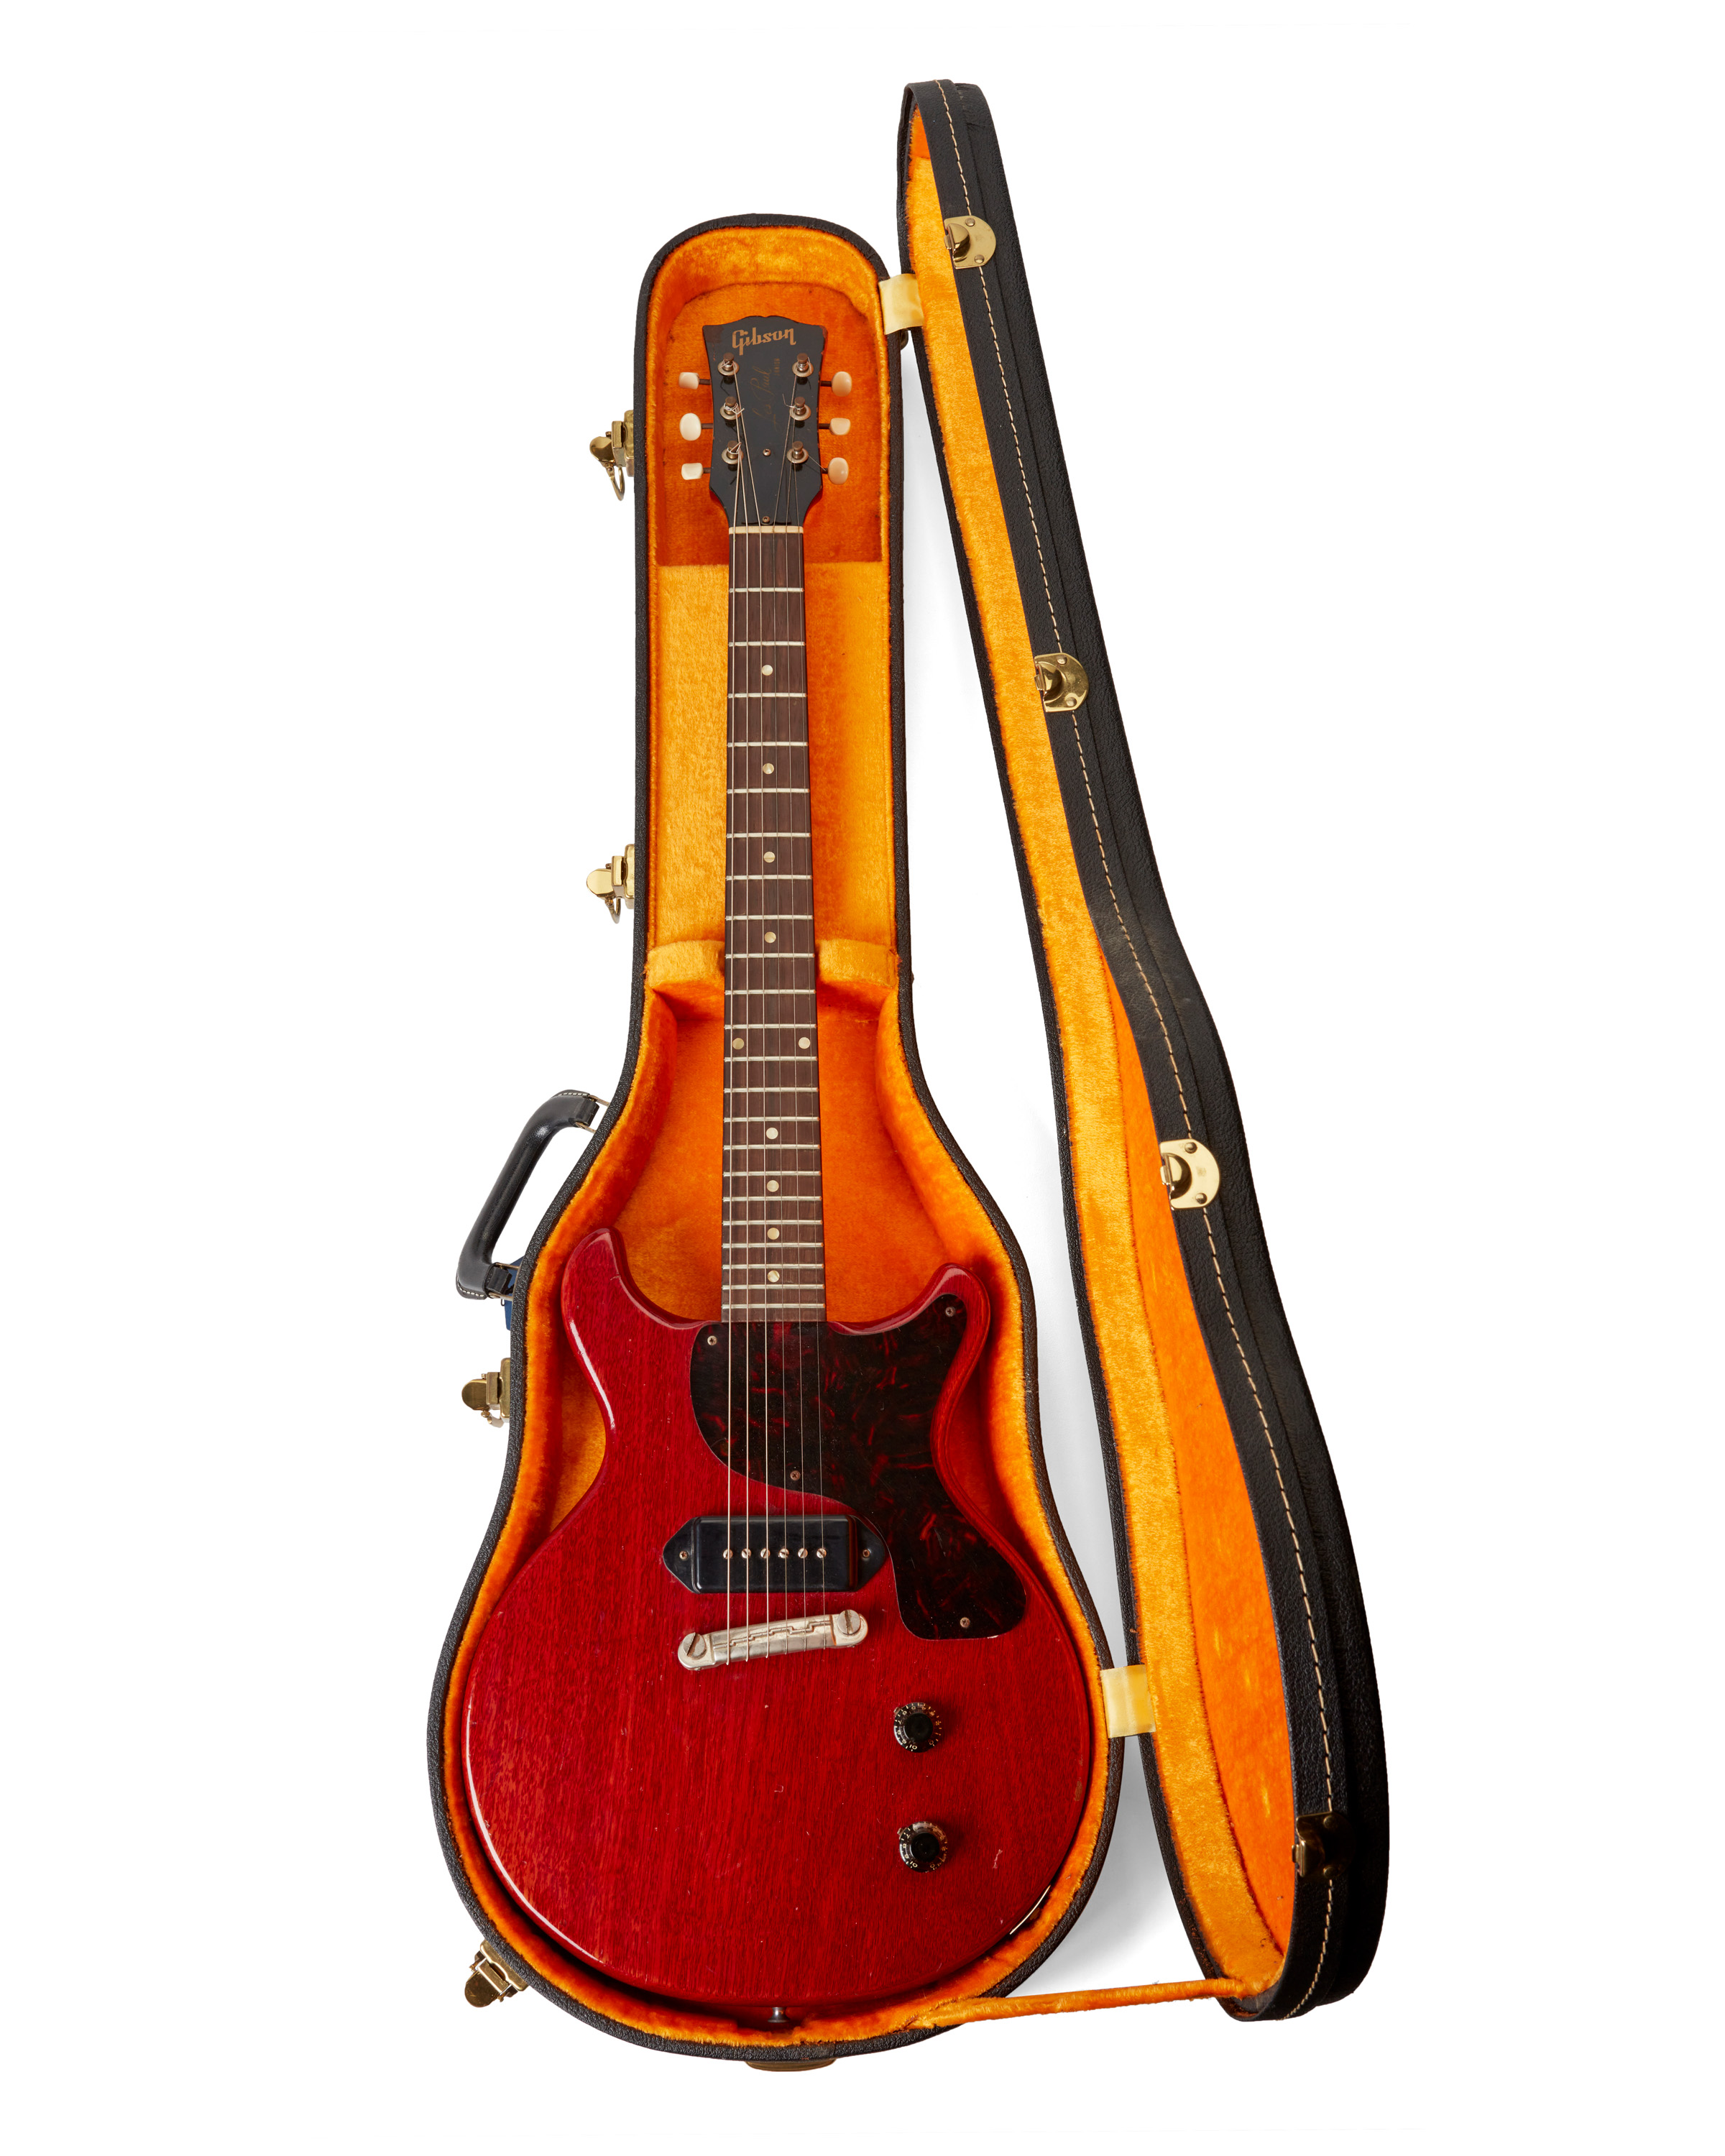 1961 Gibson Les Paul Jr. electric guitar, $8,750